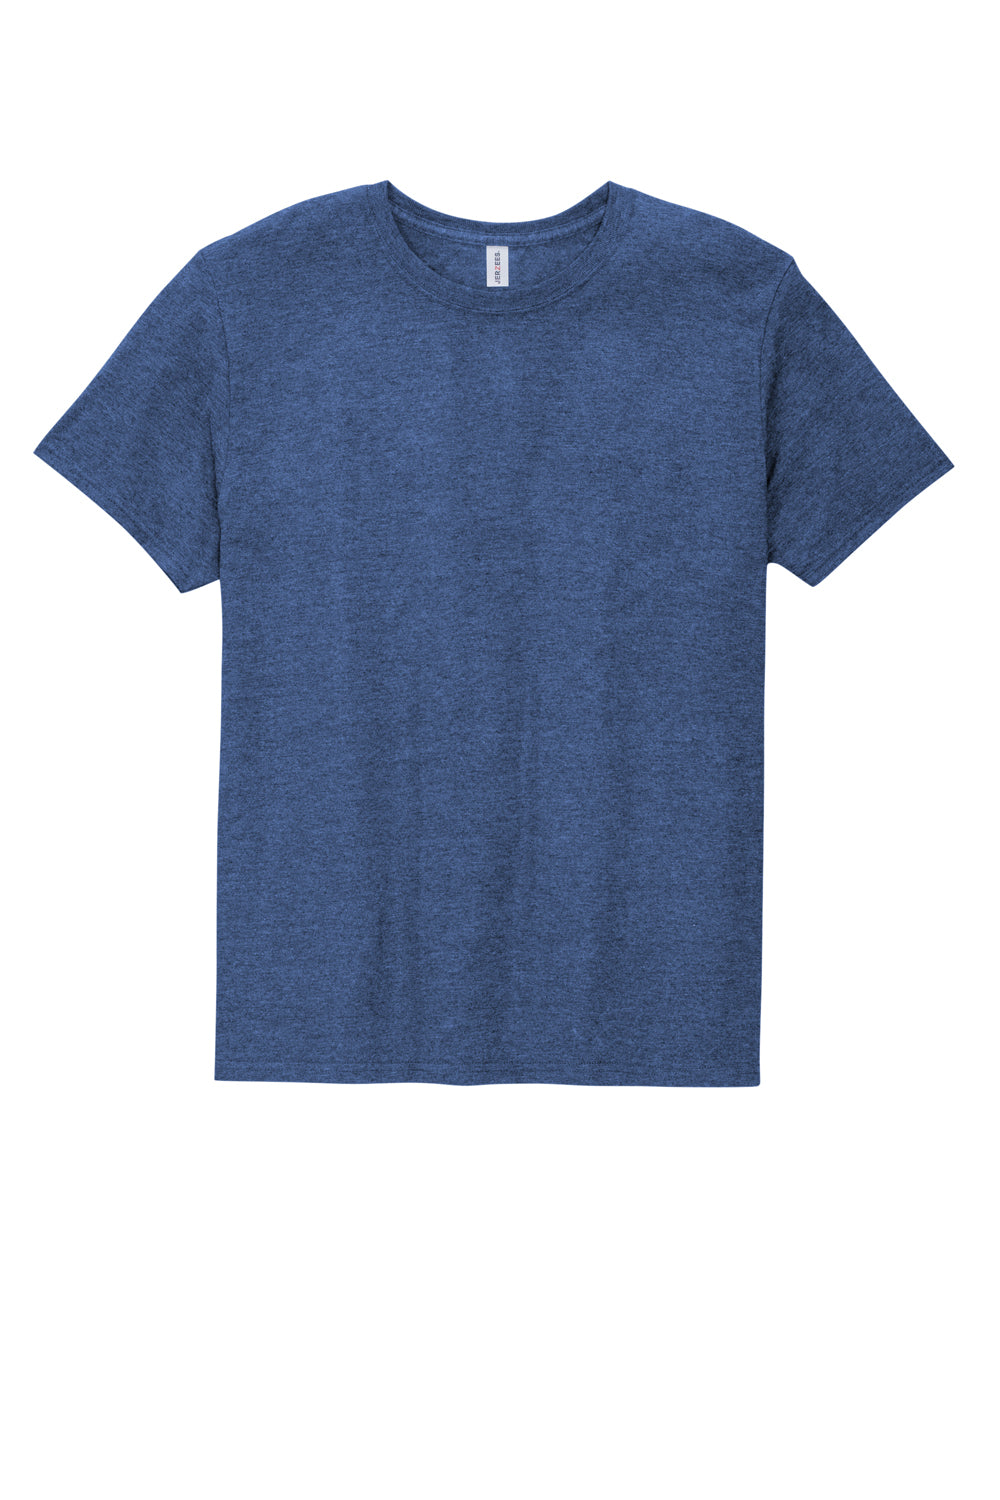 Jerzees 560M Mens Premium Blend Ring Spun Short Sleeve Crewneck T-Shirt Heather Retro Royal Blue Flat Front